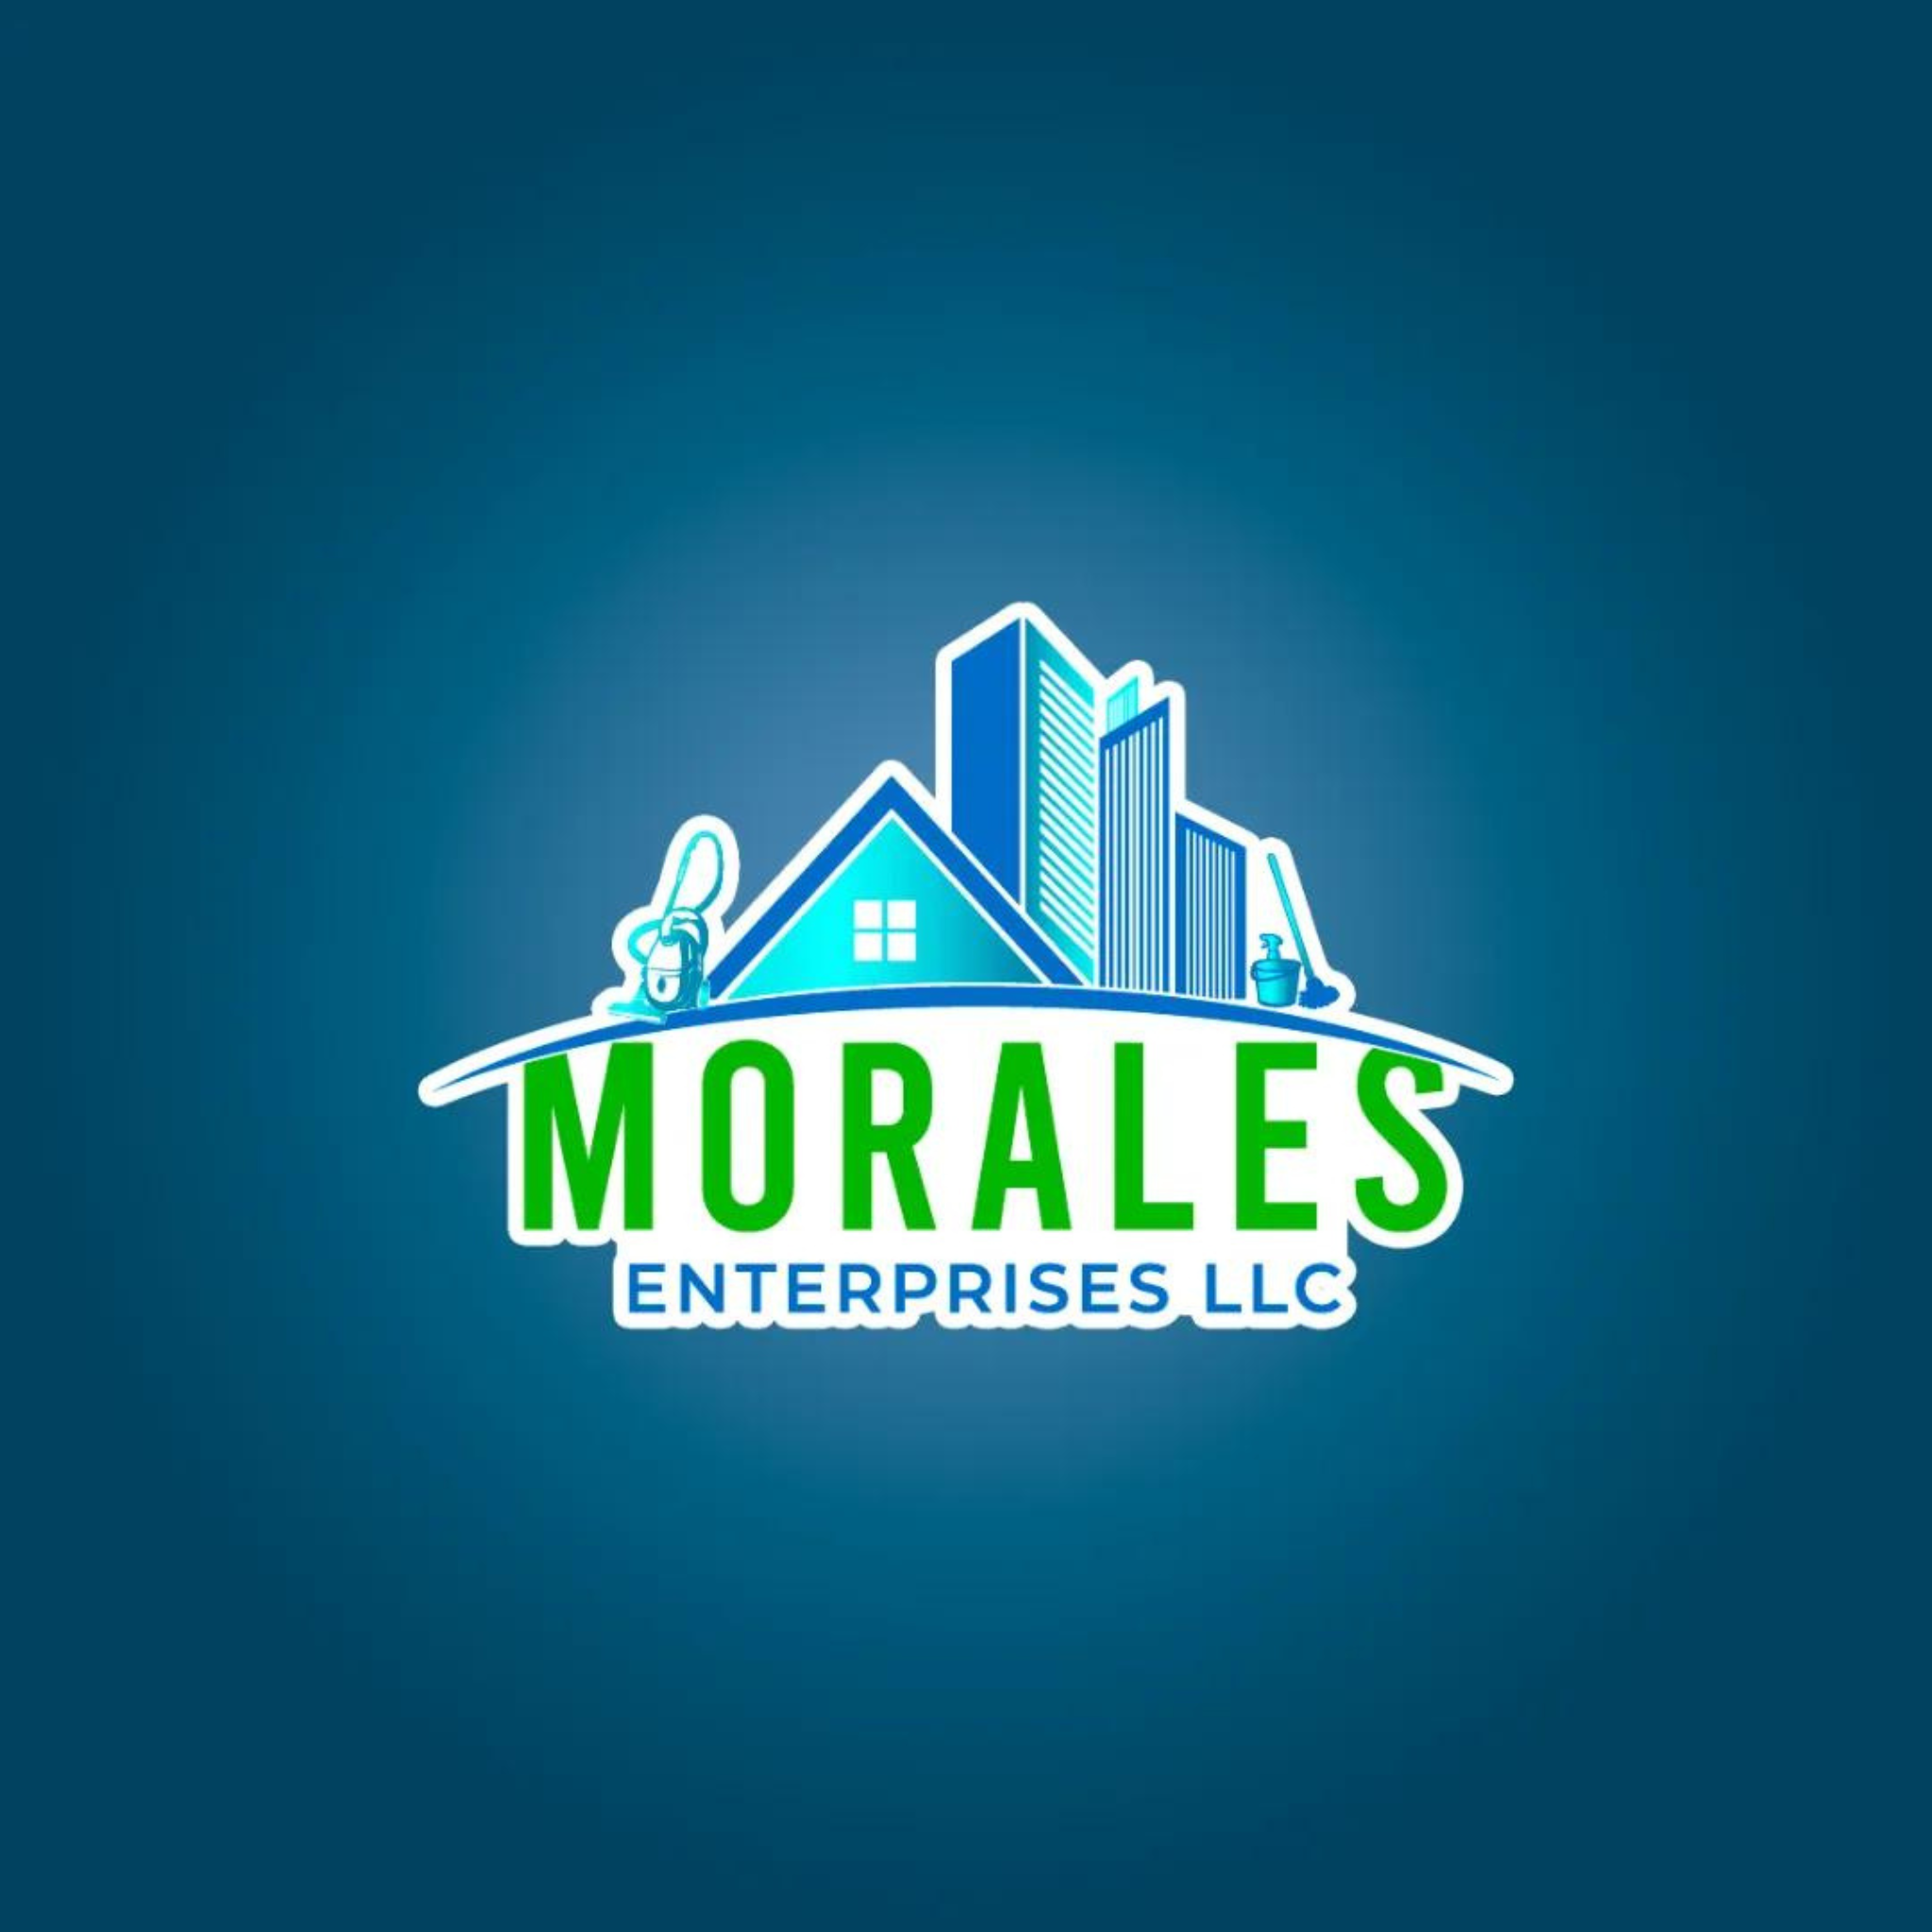 Morales Enterprises LLC